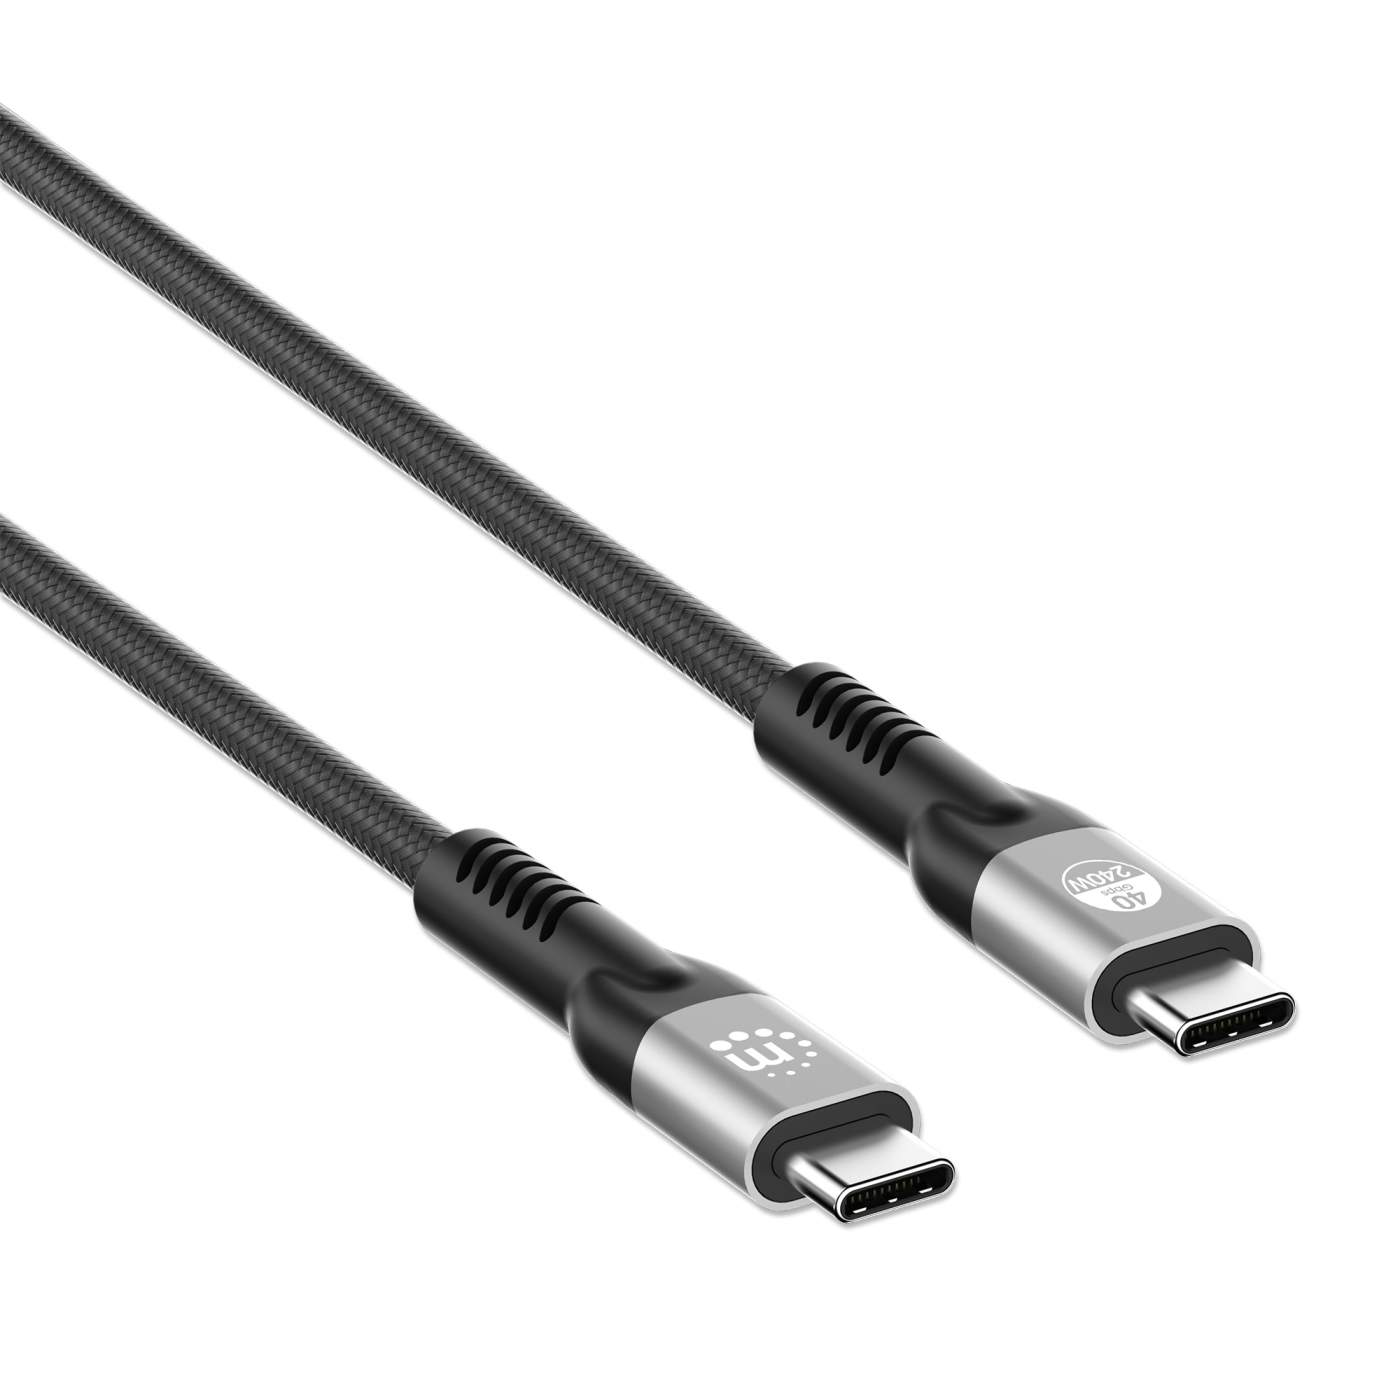 0,7M Thunderbolt 4 / USB-C Cable